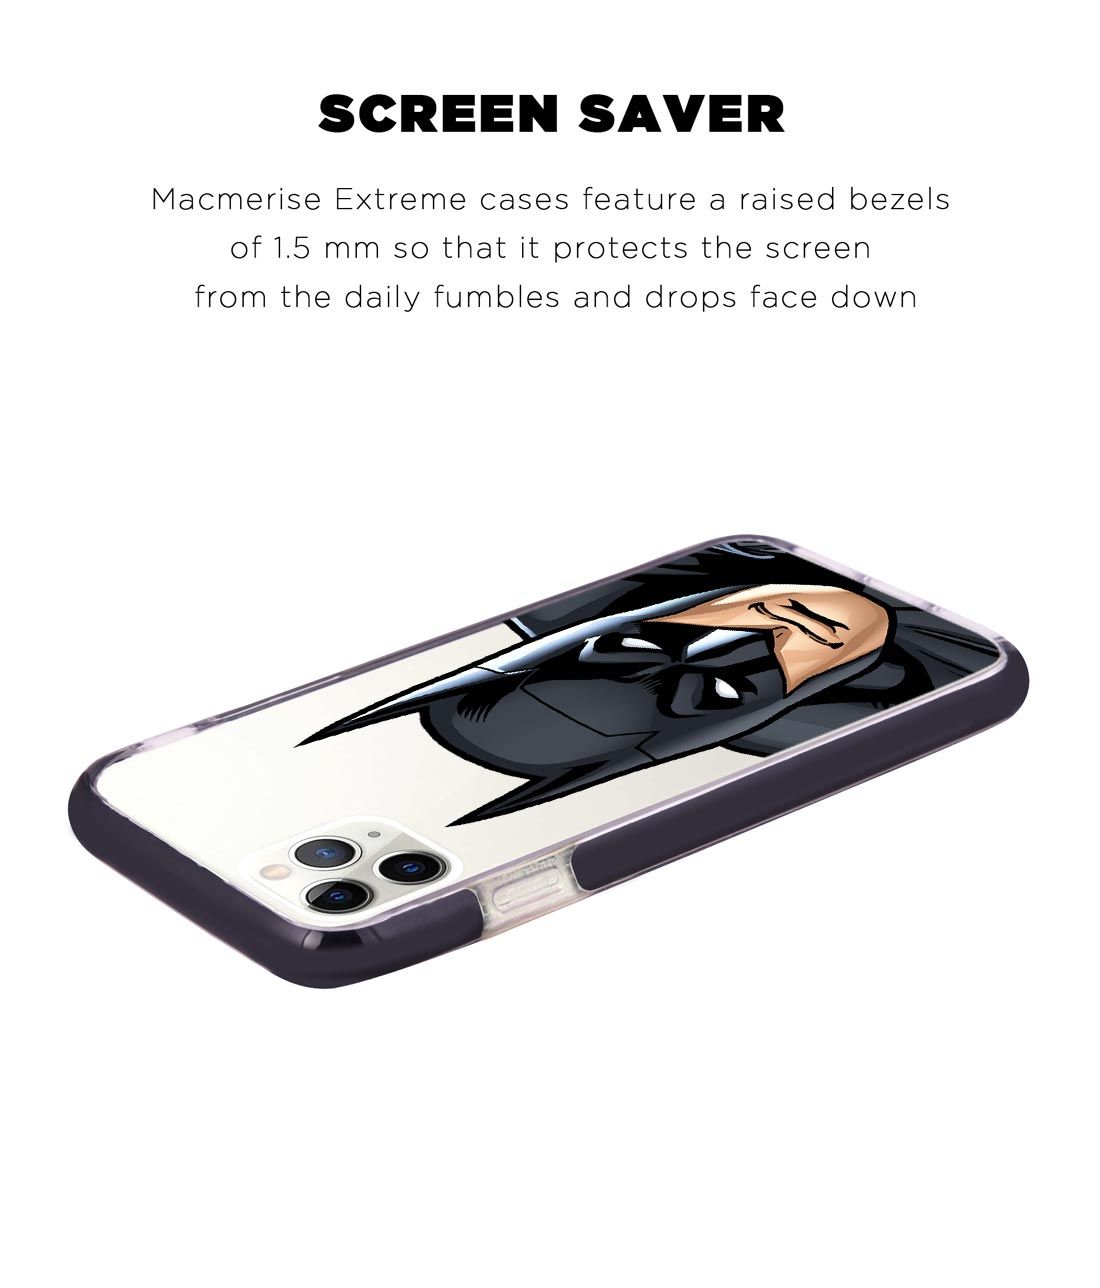 Fierce Batman - Extreme Phone Case for iPhone 11 Pro